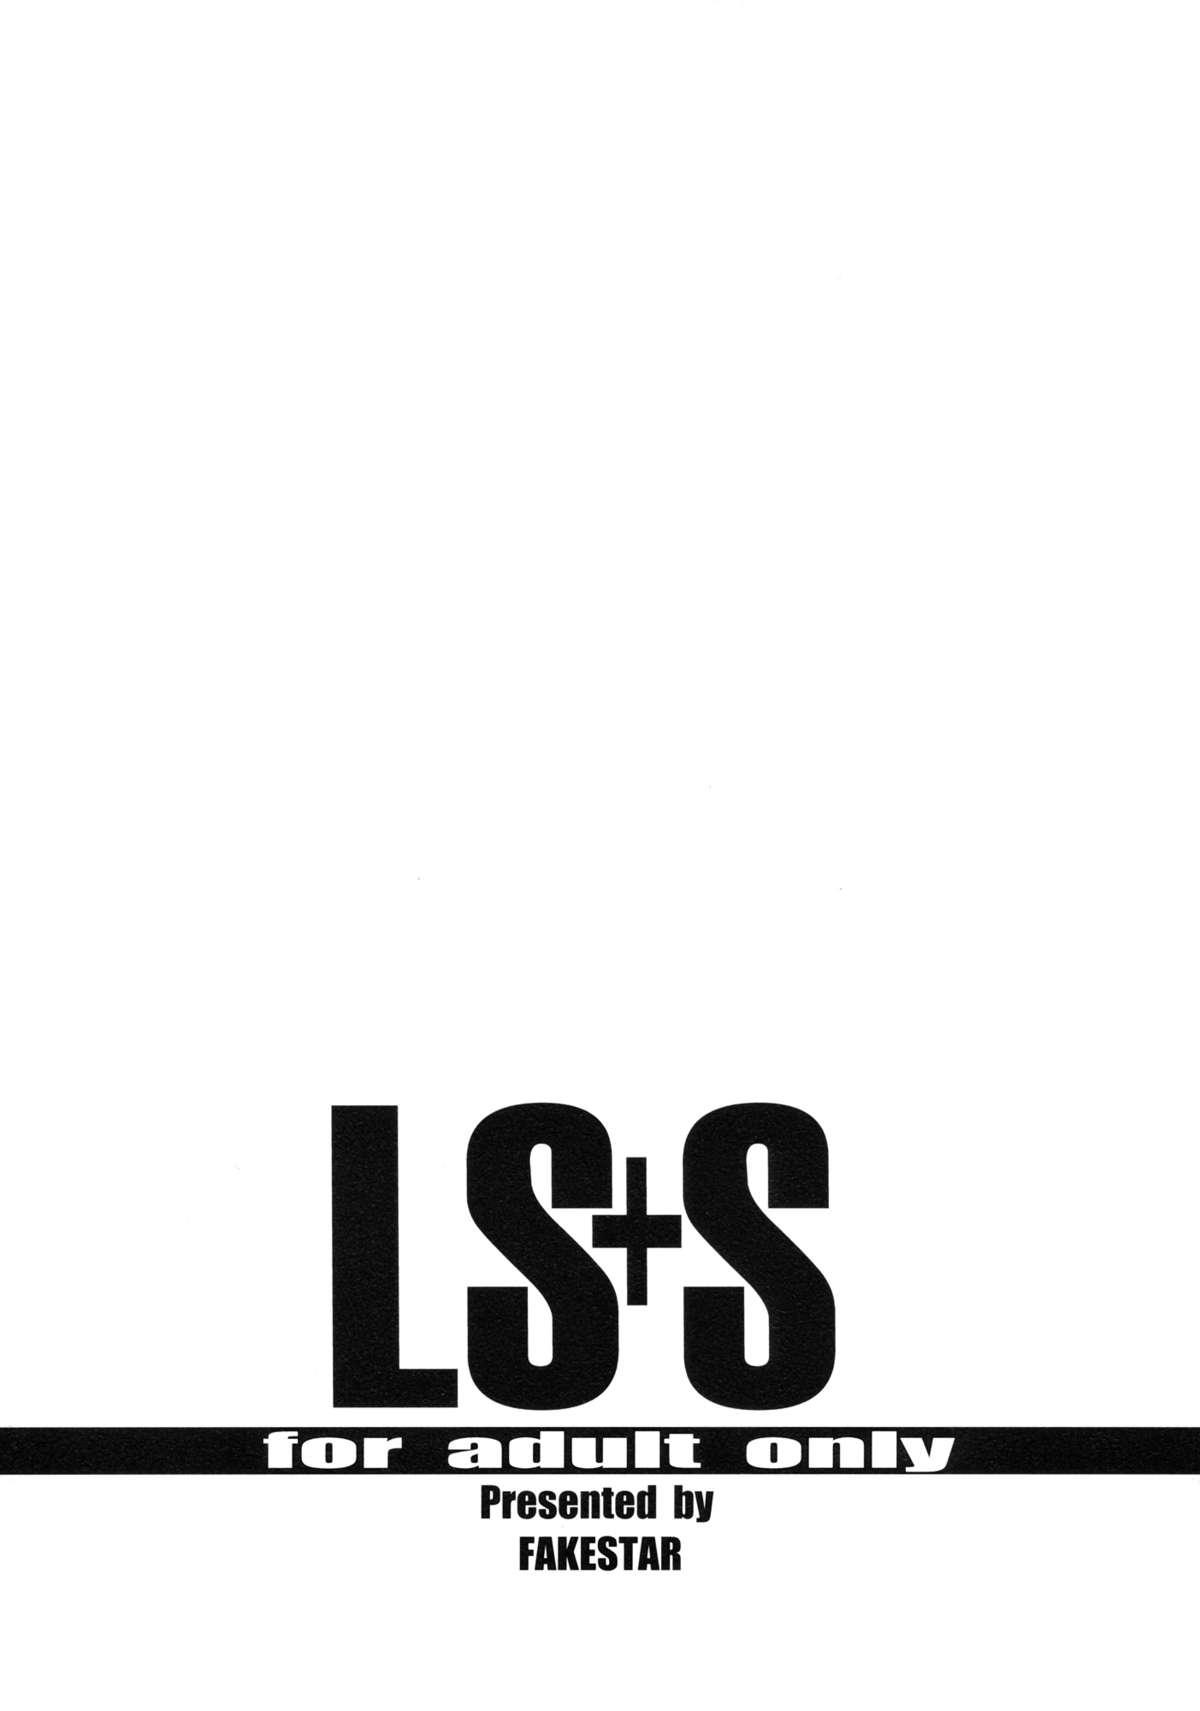 LS+S 17